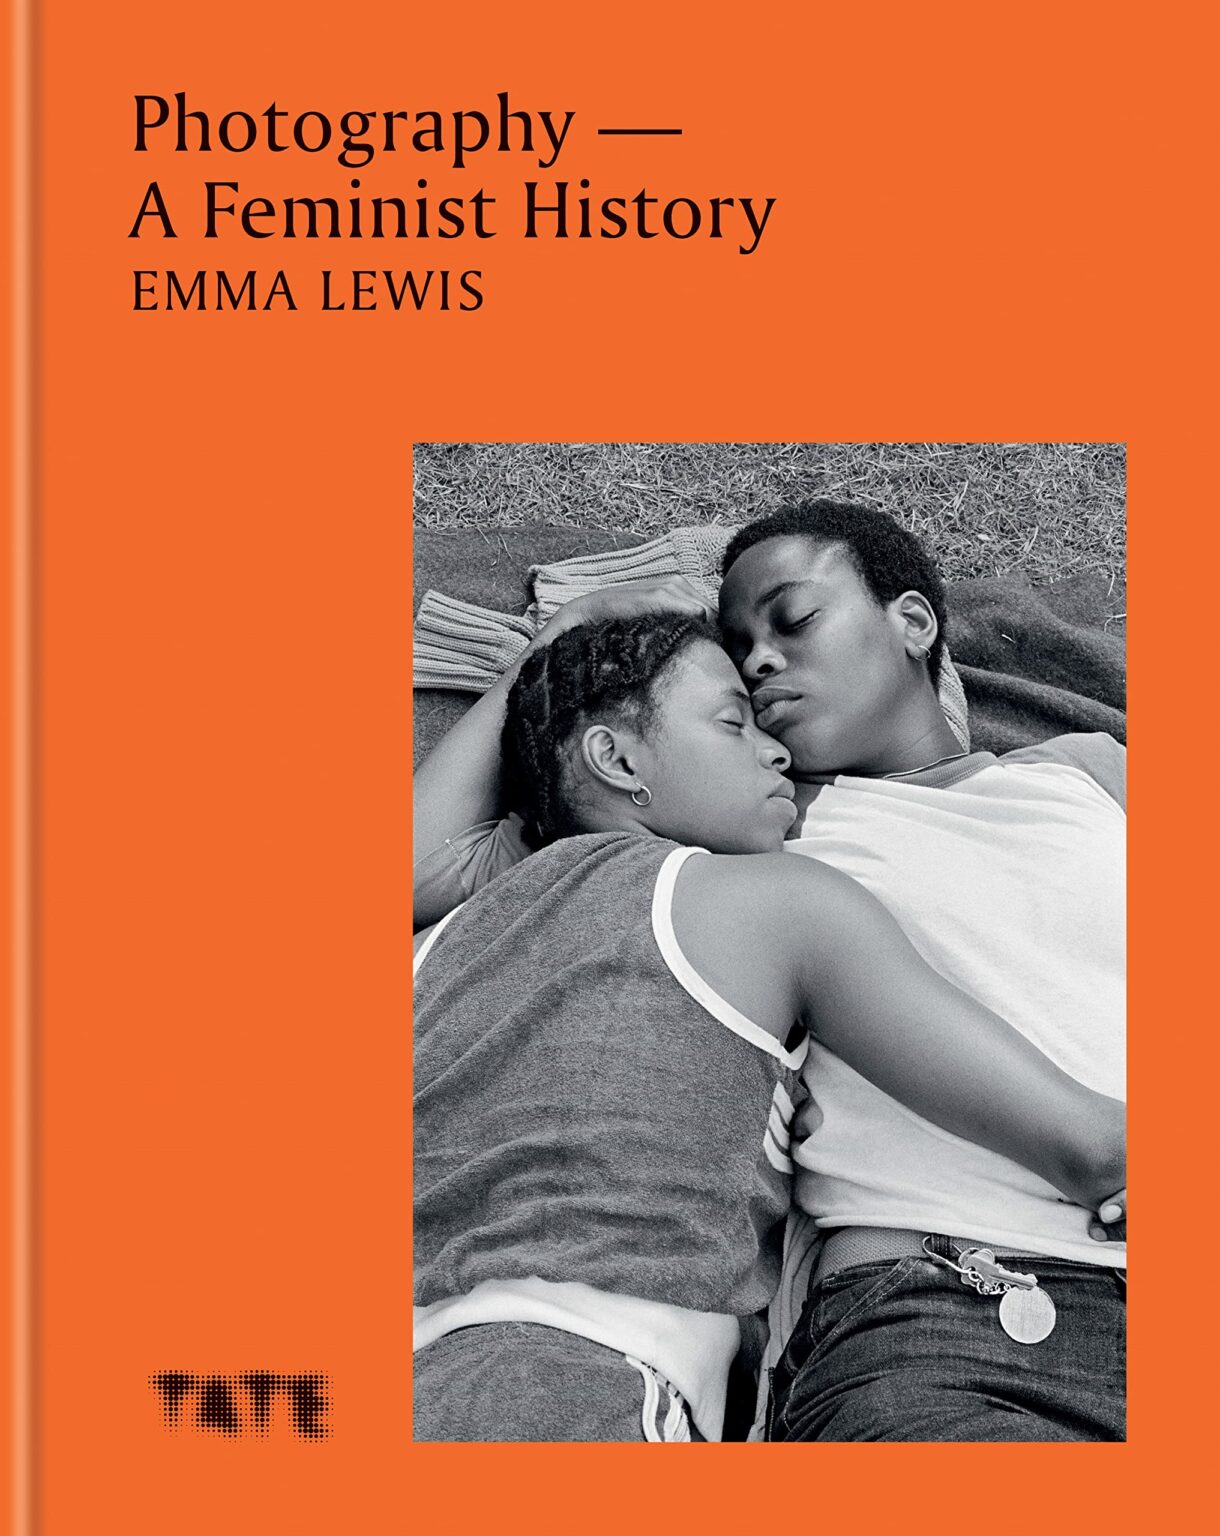 A Feminist History